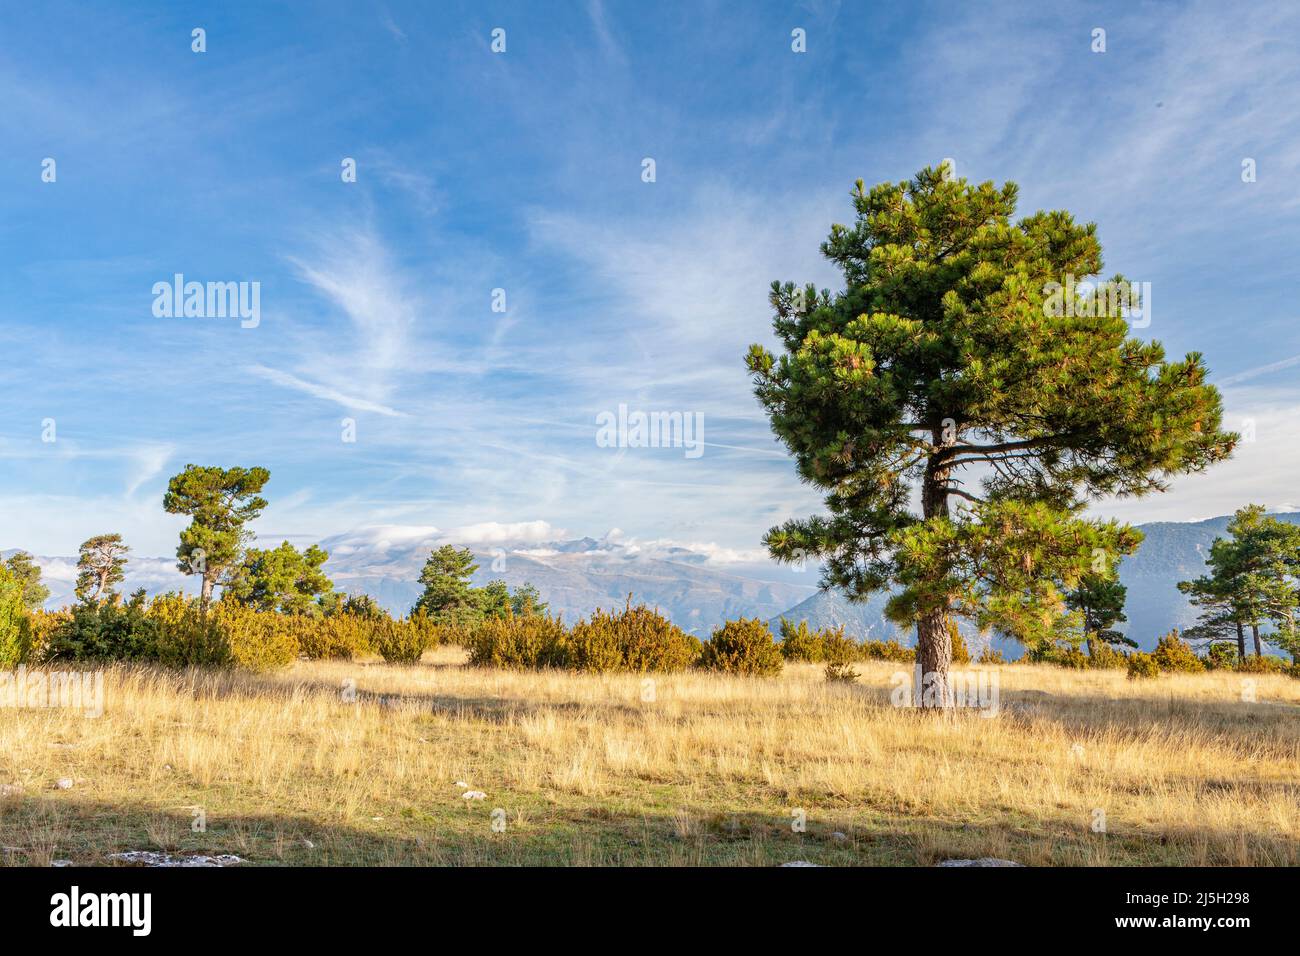 Natual Reserve of Boumort, Lleida, Spain Stock Photo